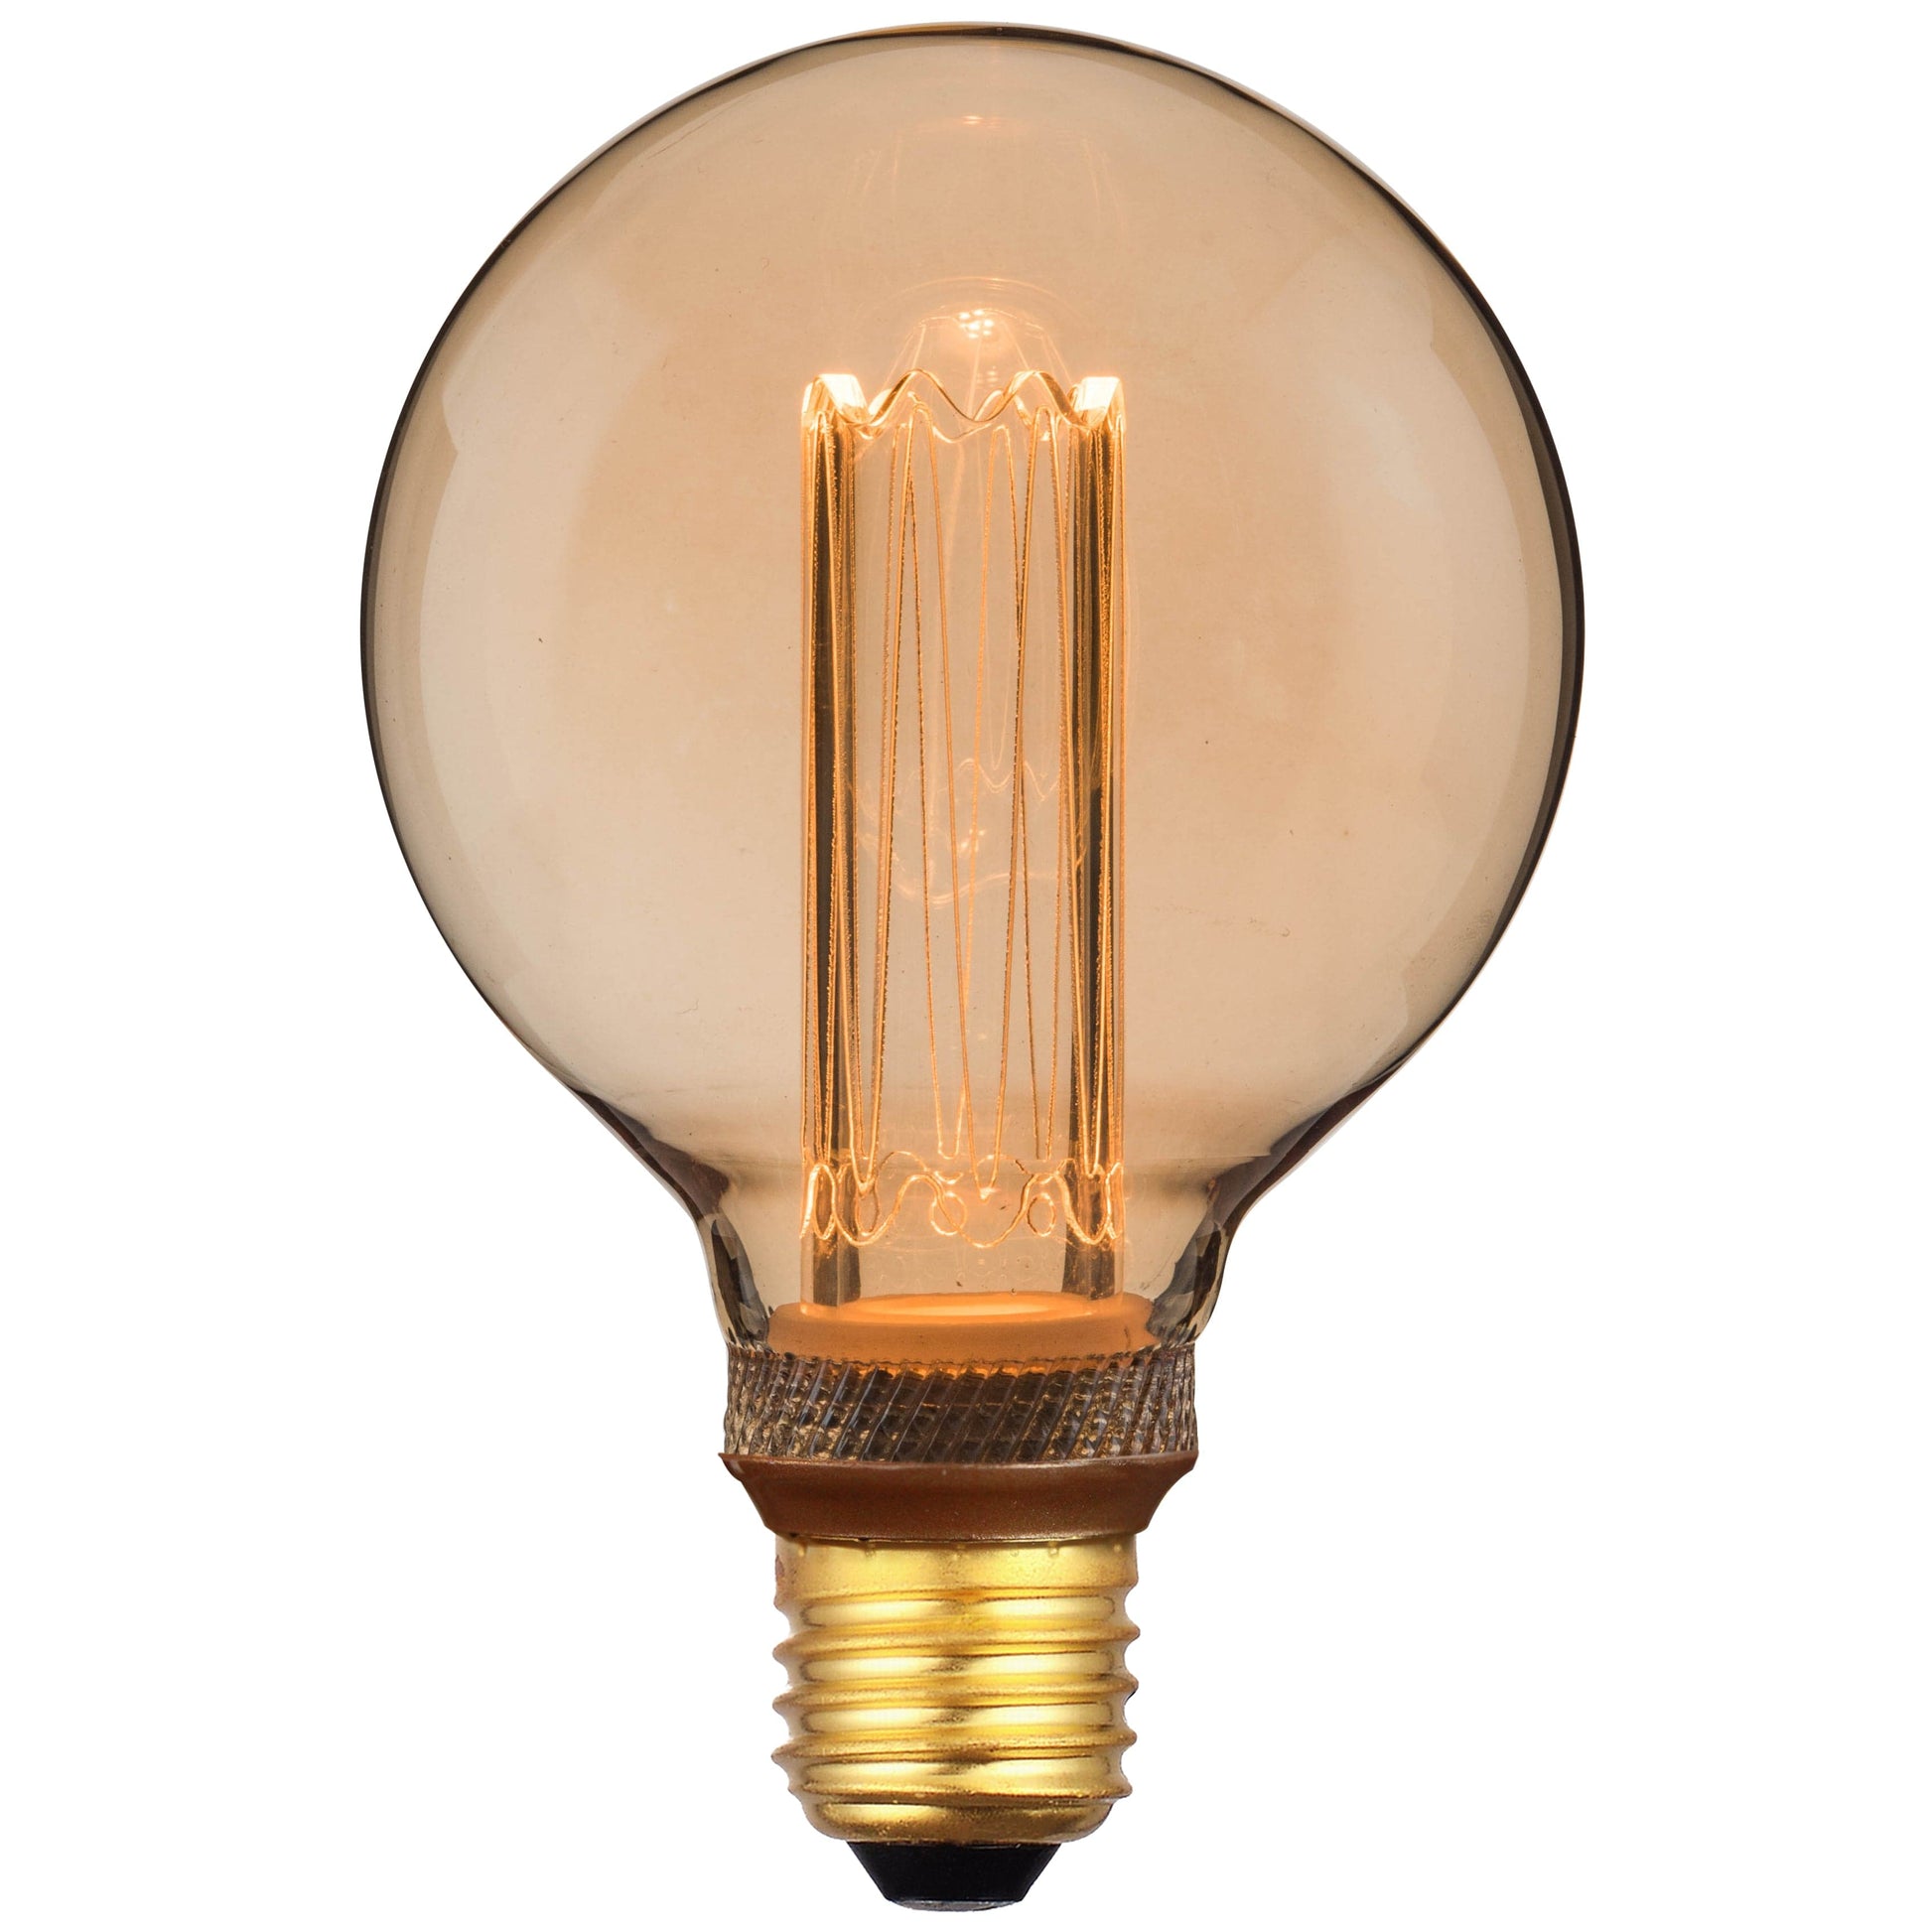 Heavenly Chandeliers Light Bulbs E27 St64 Decorative Dimmable Light Bulb